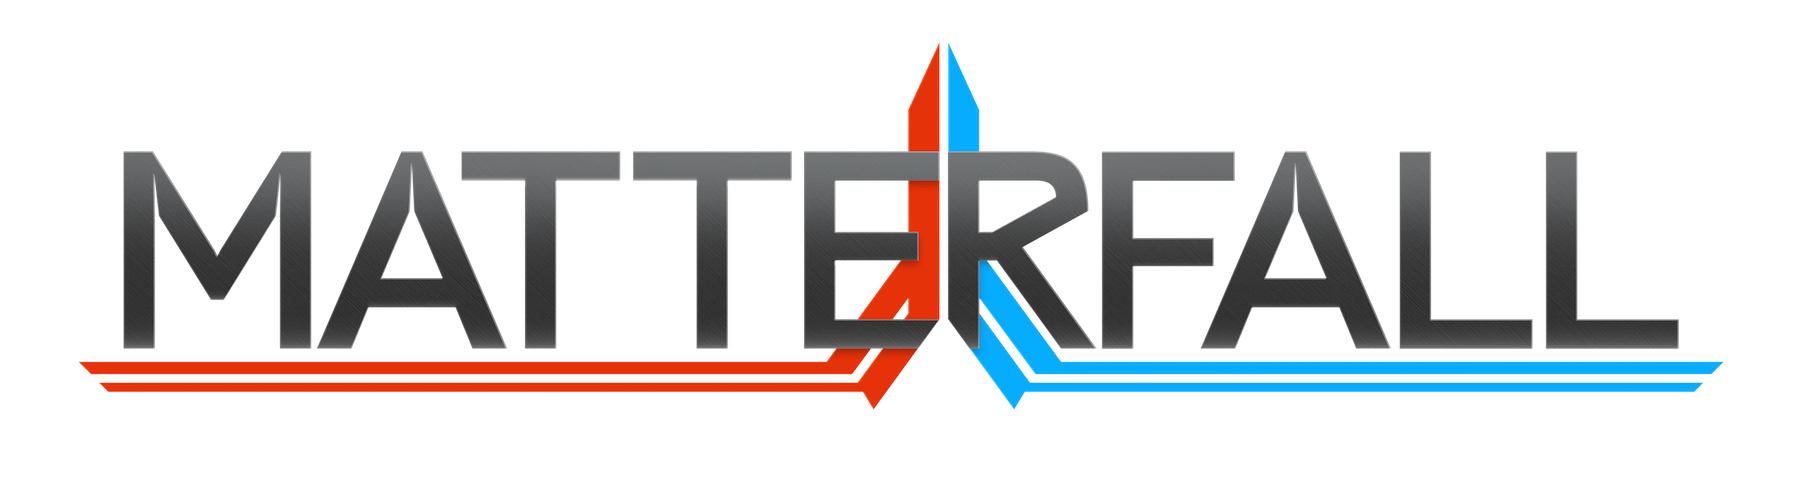 Matterfall_logo